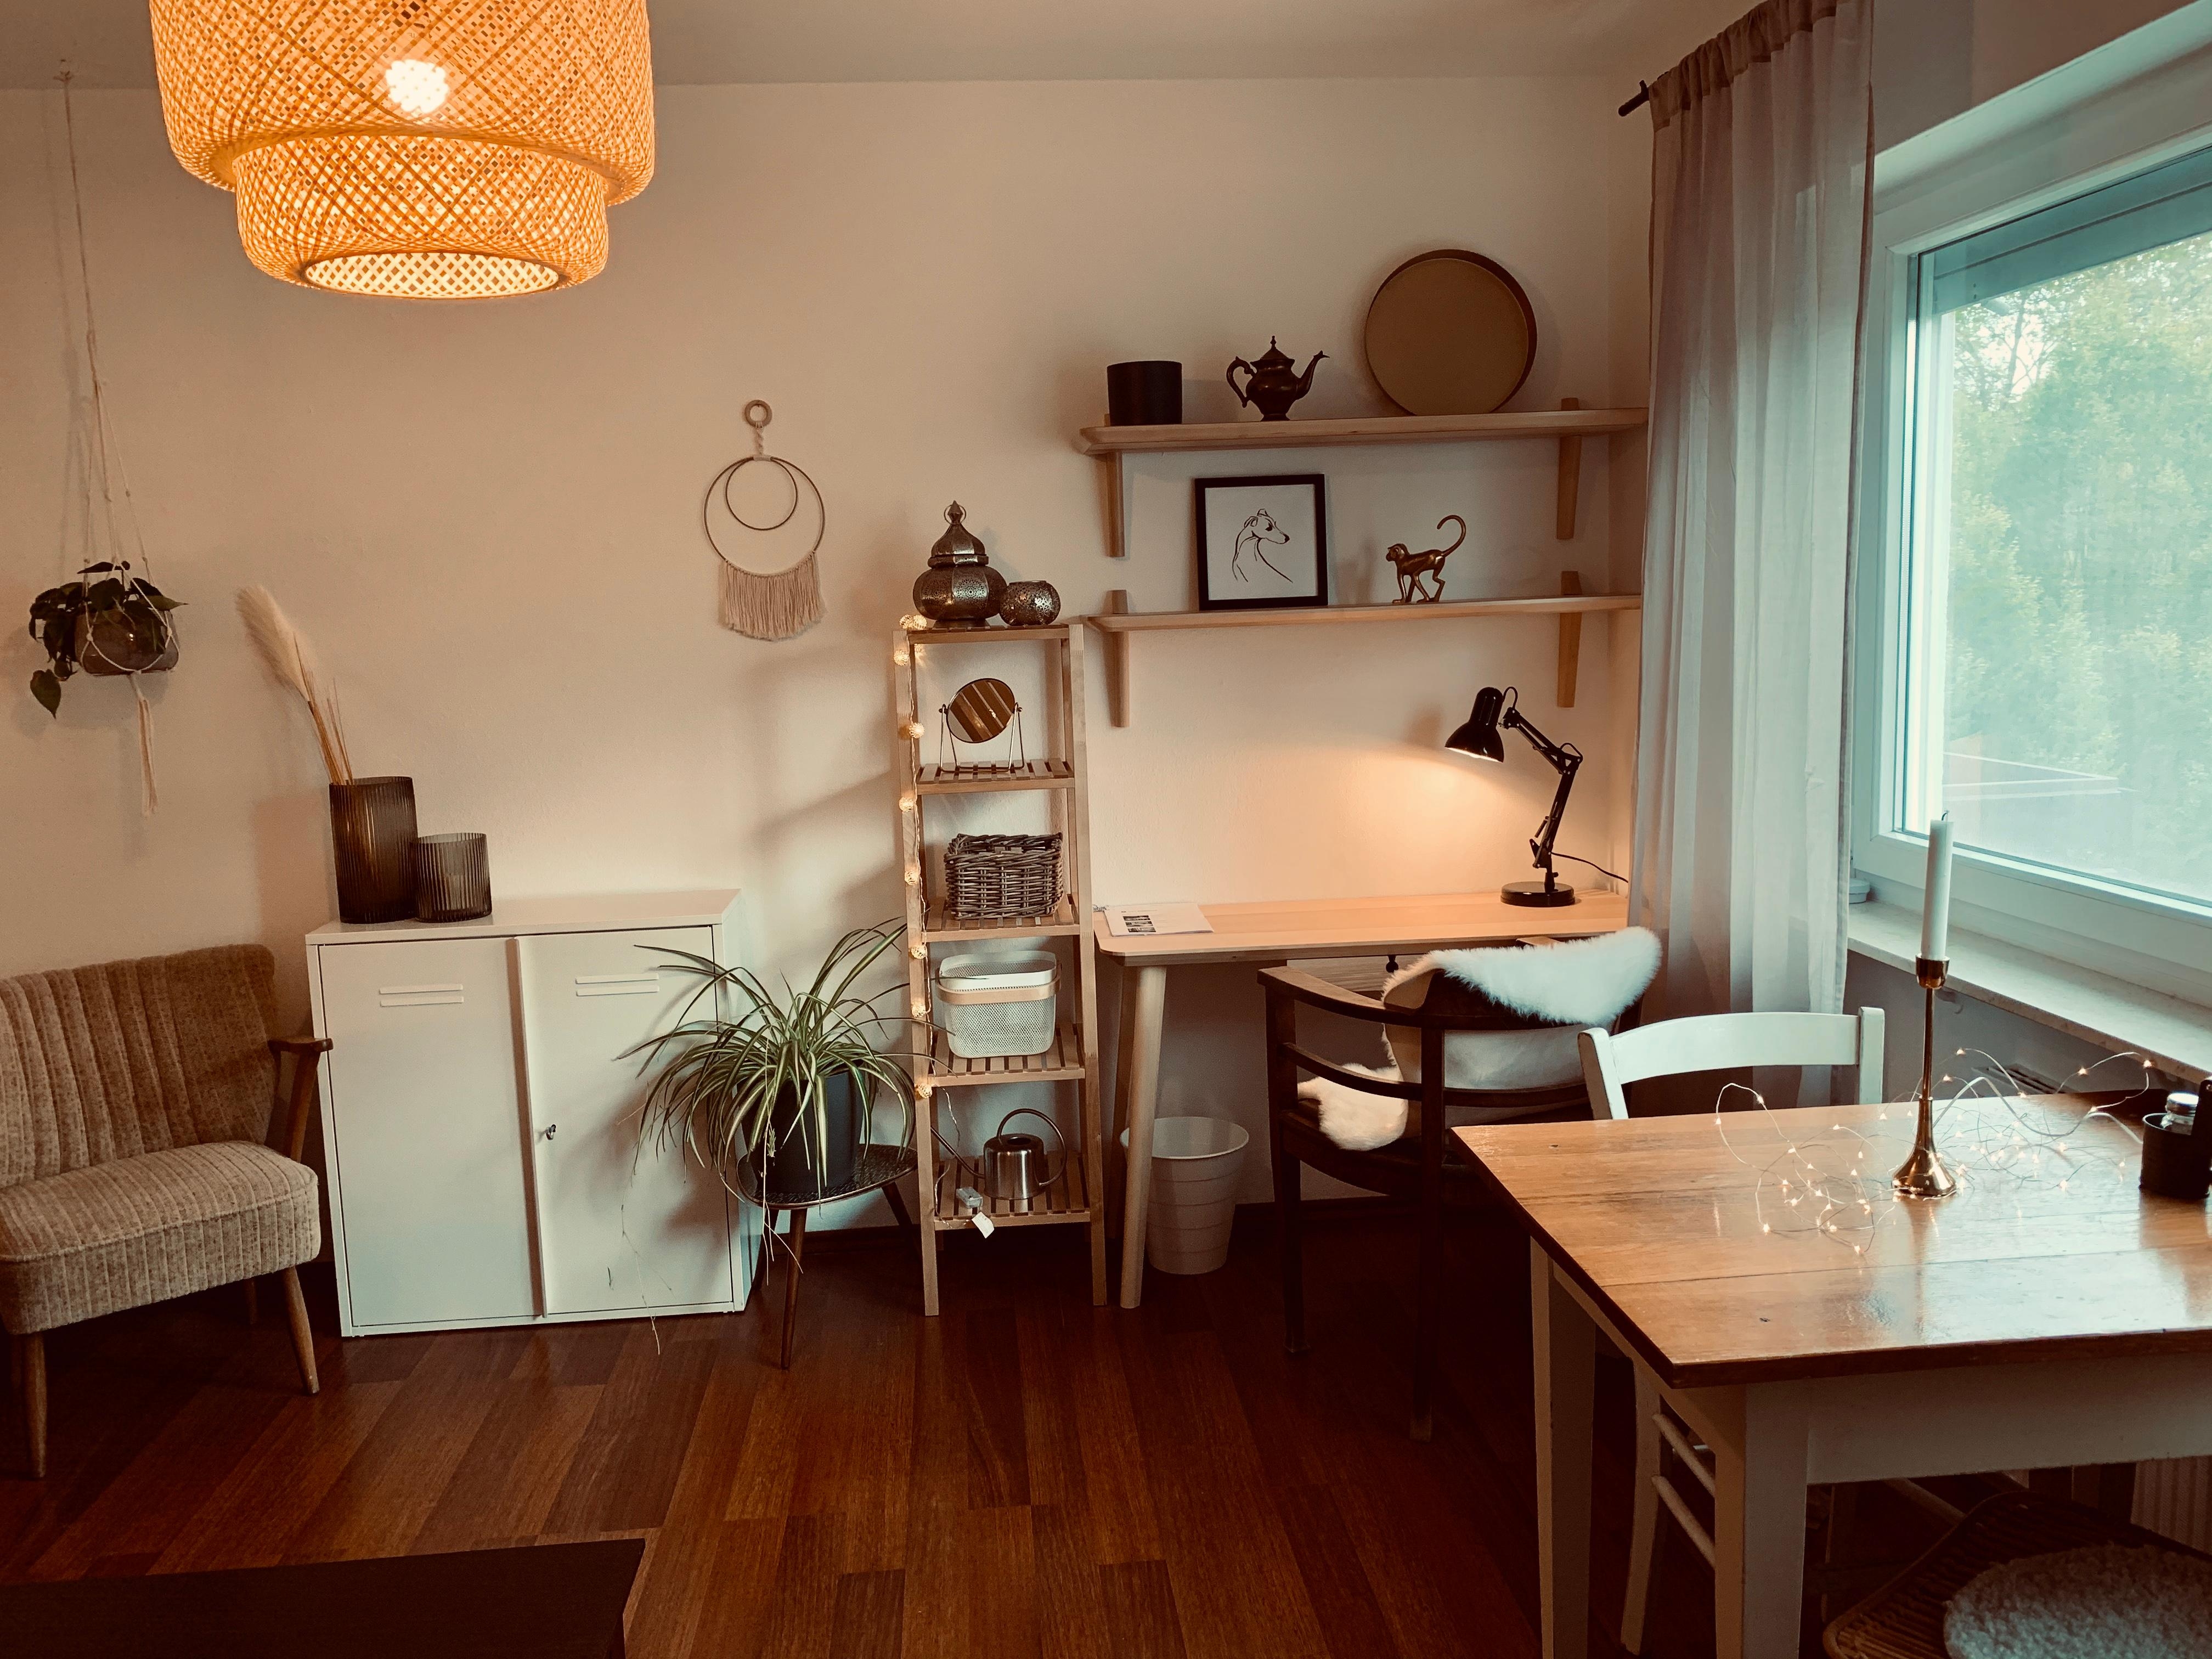 BOHO Airbnb Wohnung #boho #vintage #interiordesign #leviinterior #bohostyle 